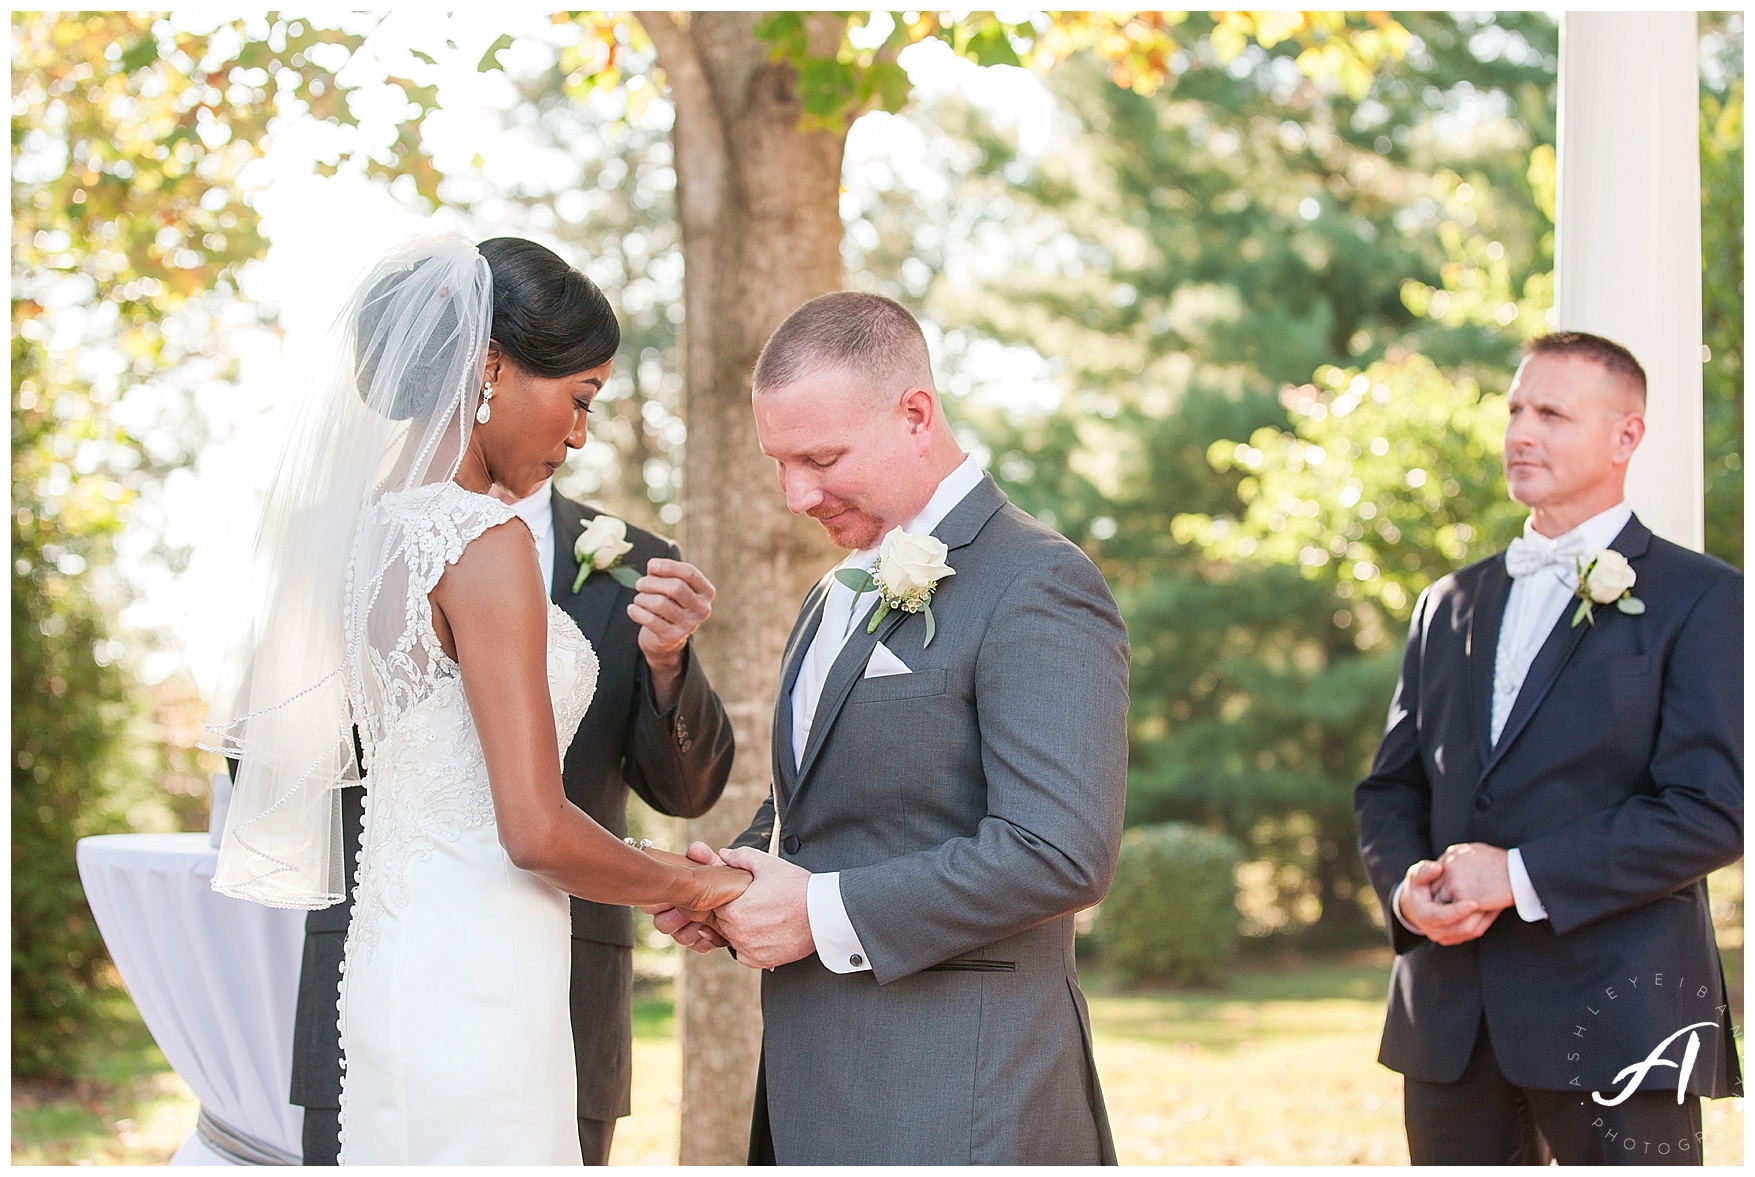 Trivium Estate Wedding || Charlottesville and Lynchburg Wedding Photographer || www.ashleyeiban.com